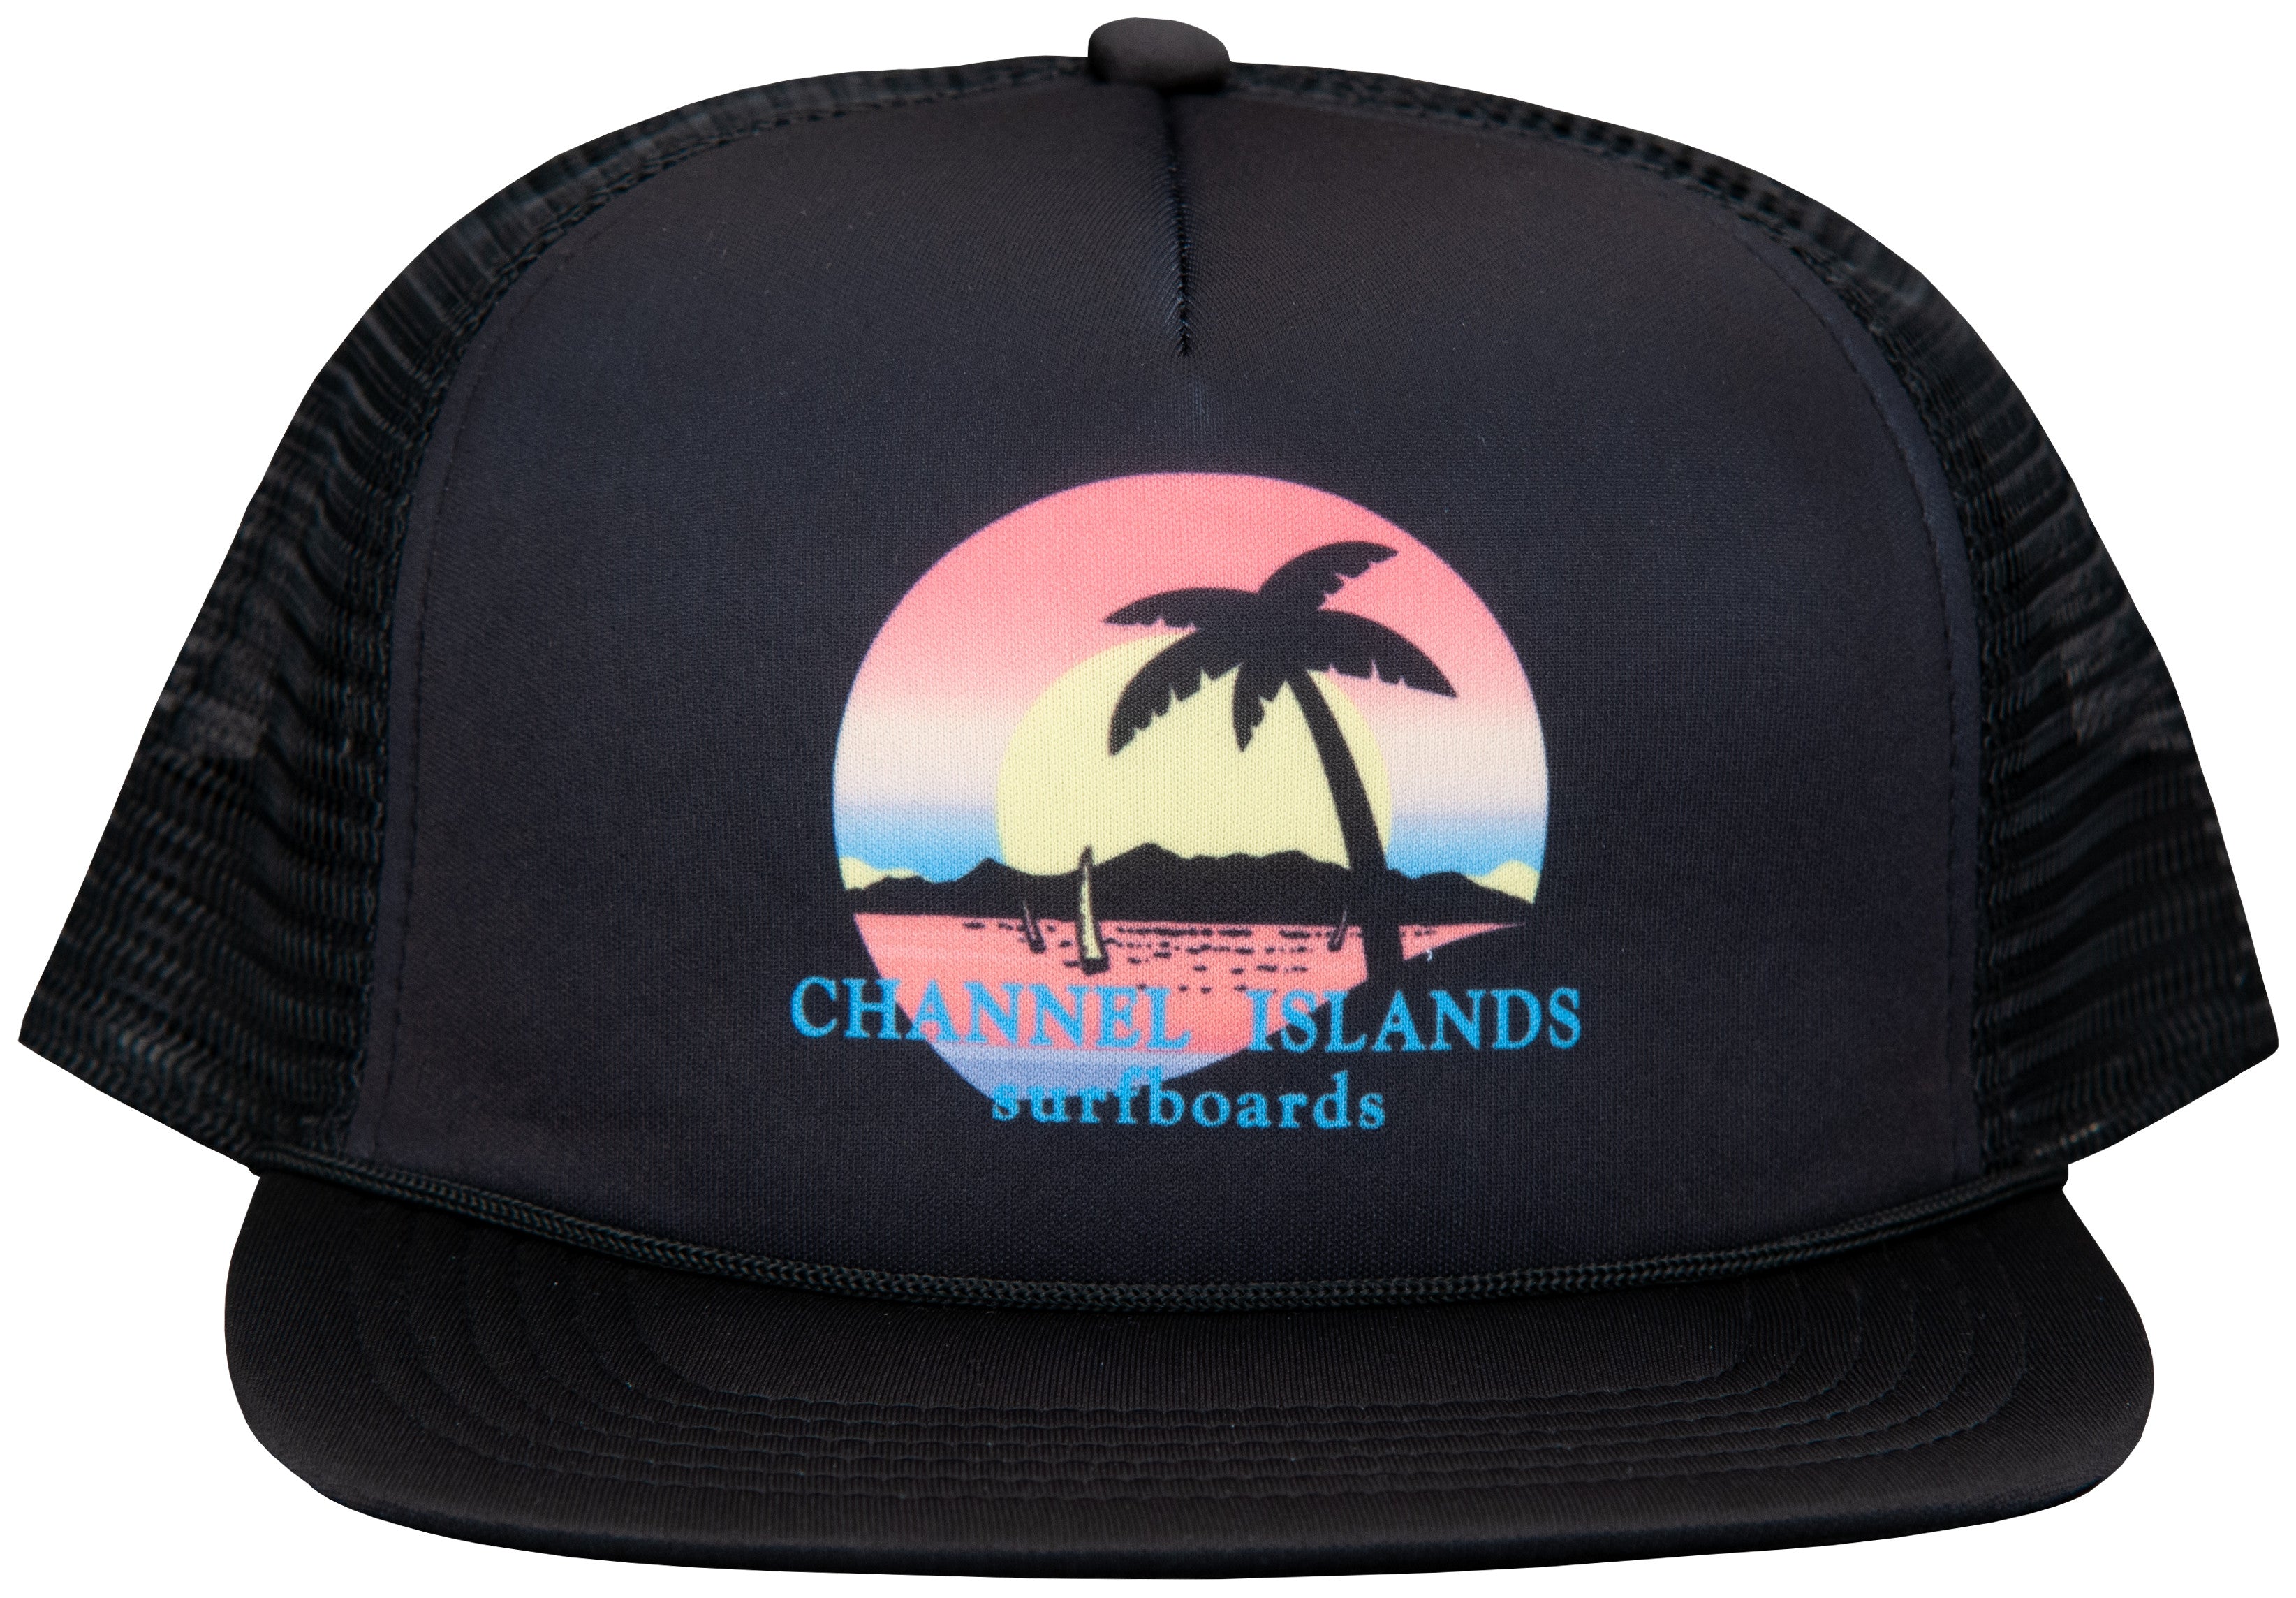 Channel Islands Surfboards Island Shadows Trucker Hat 001-Black One Size